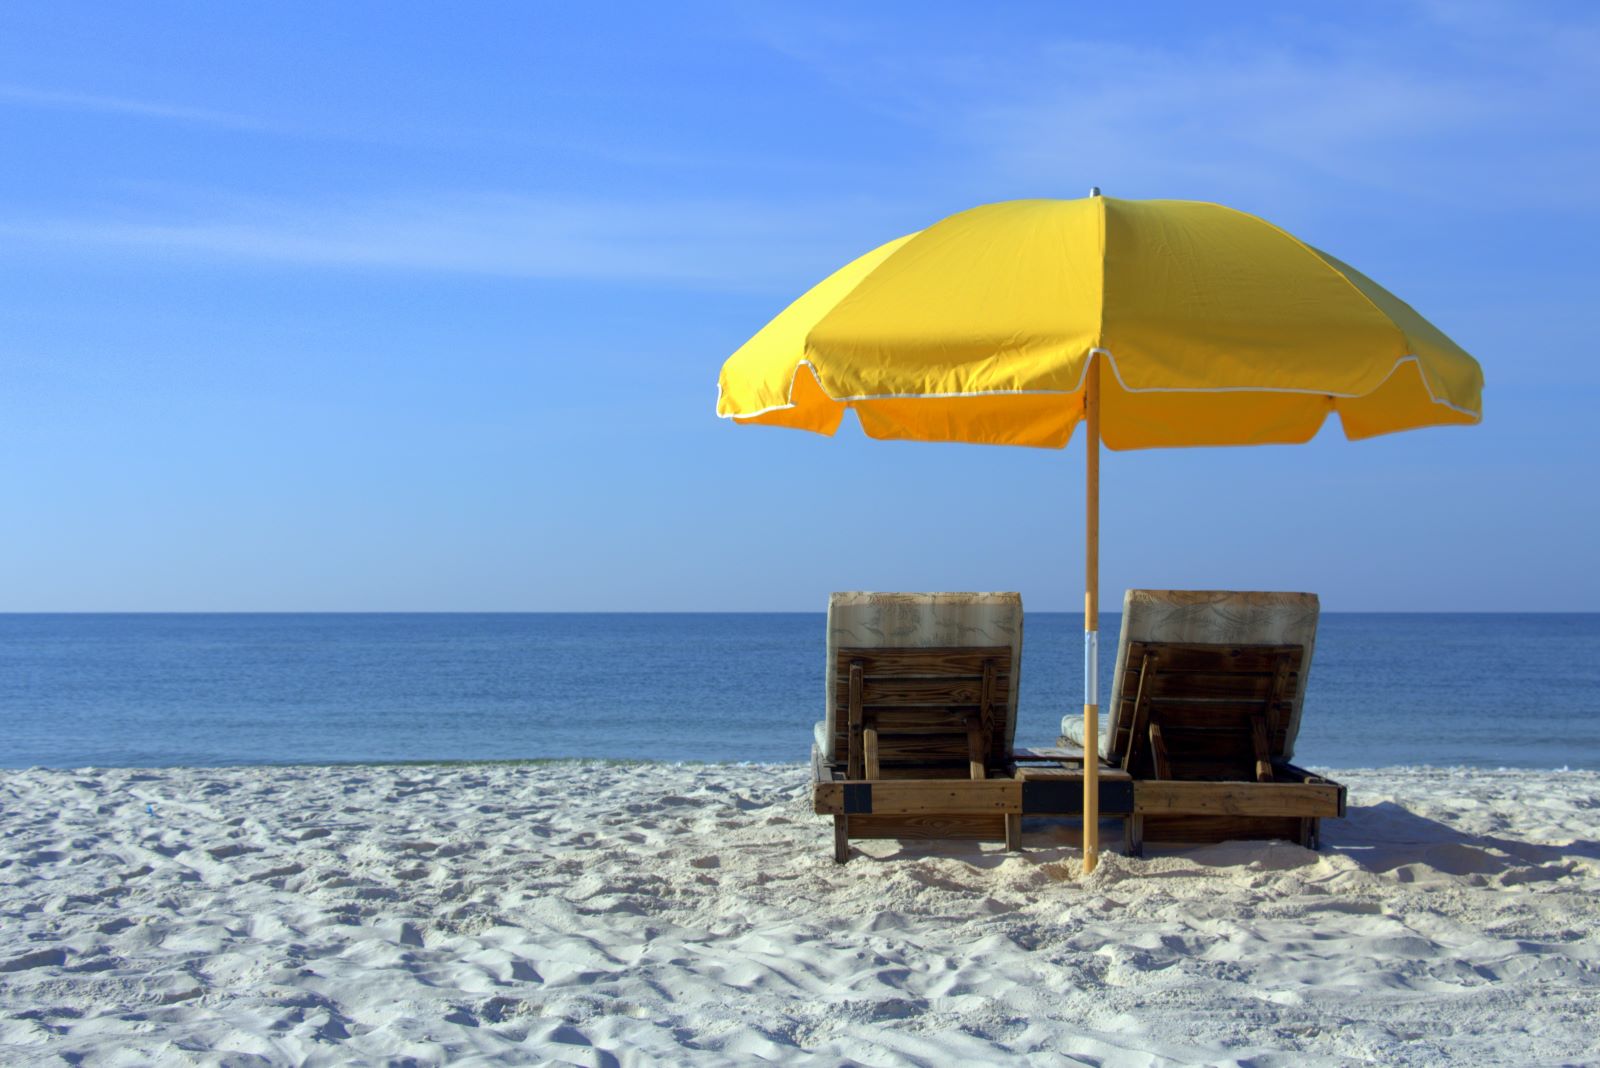 Two beach chairs under an umbrella facing the ocean on the beach.